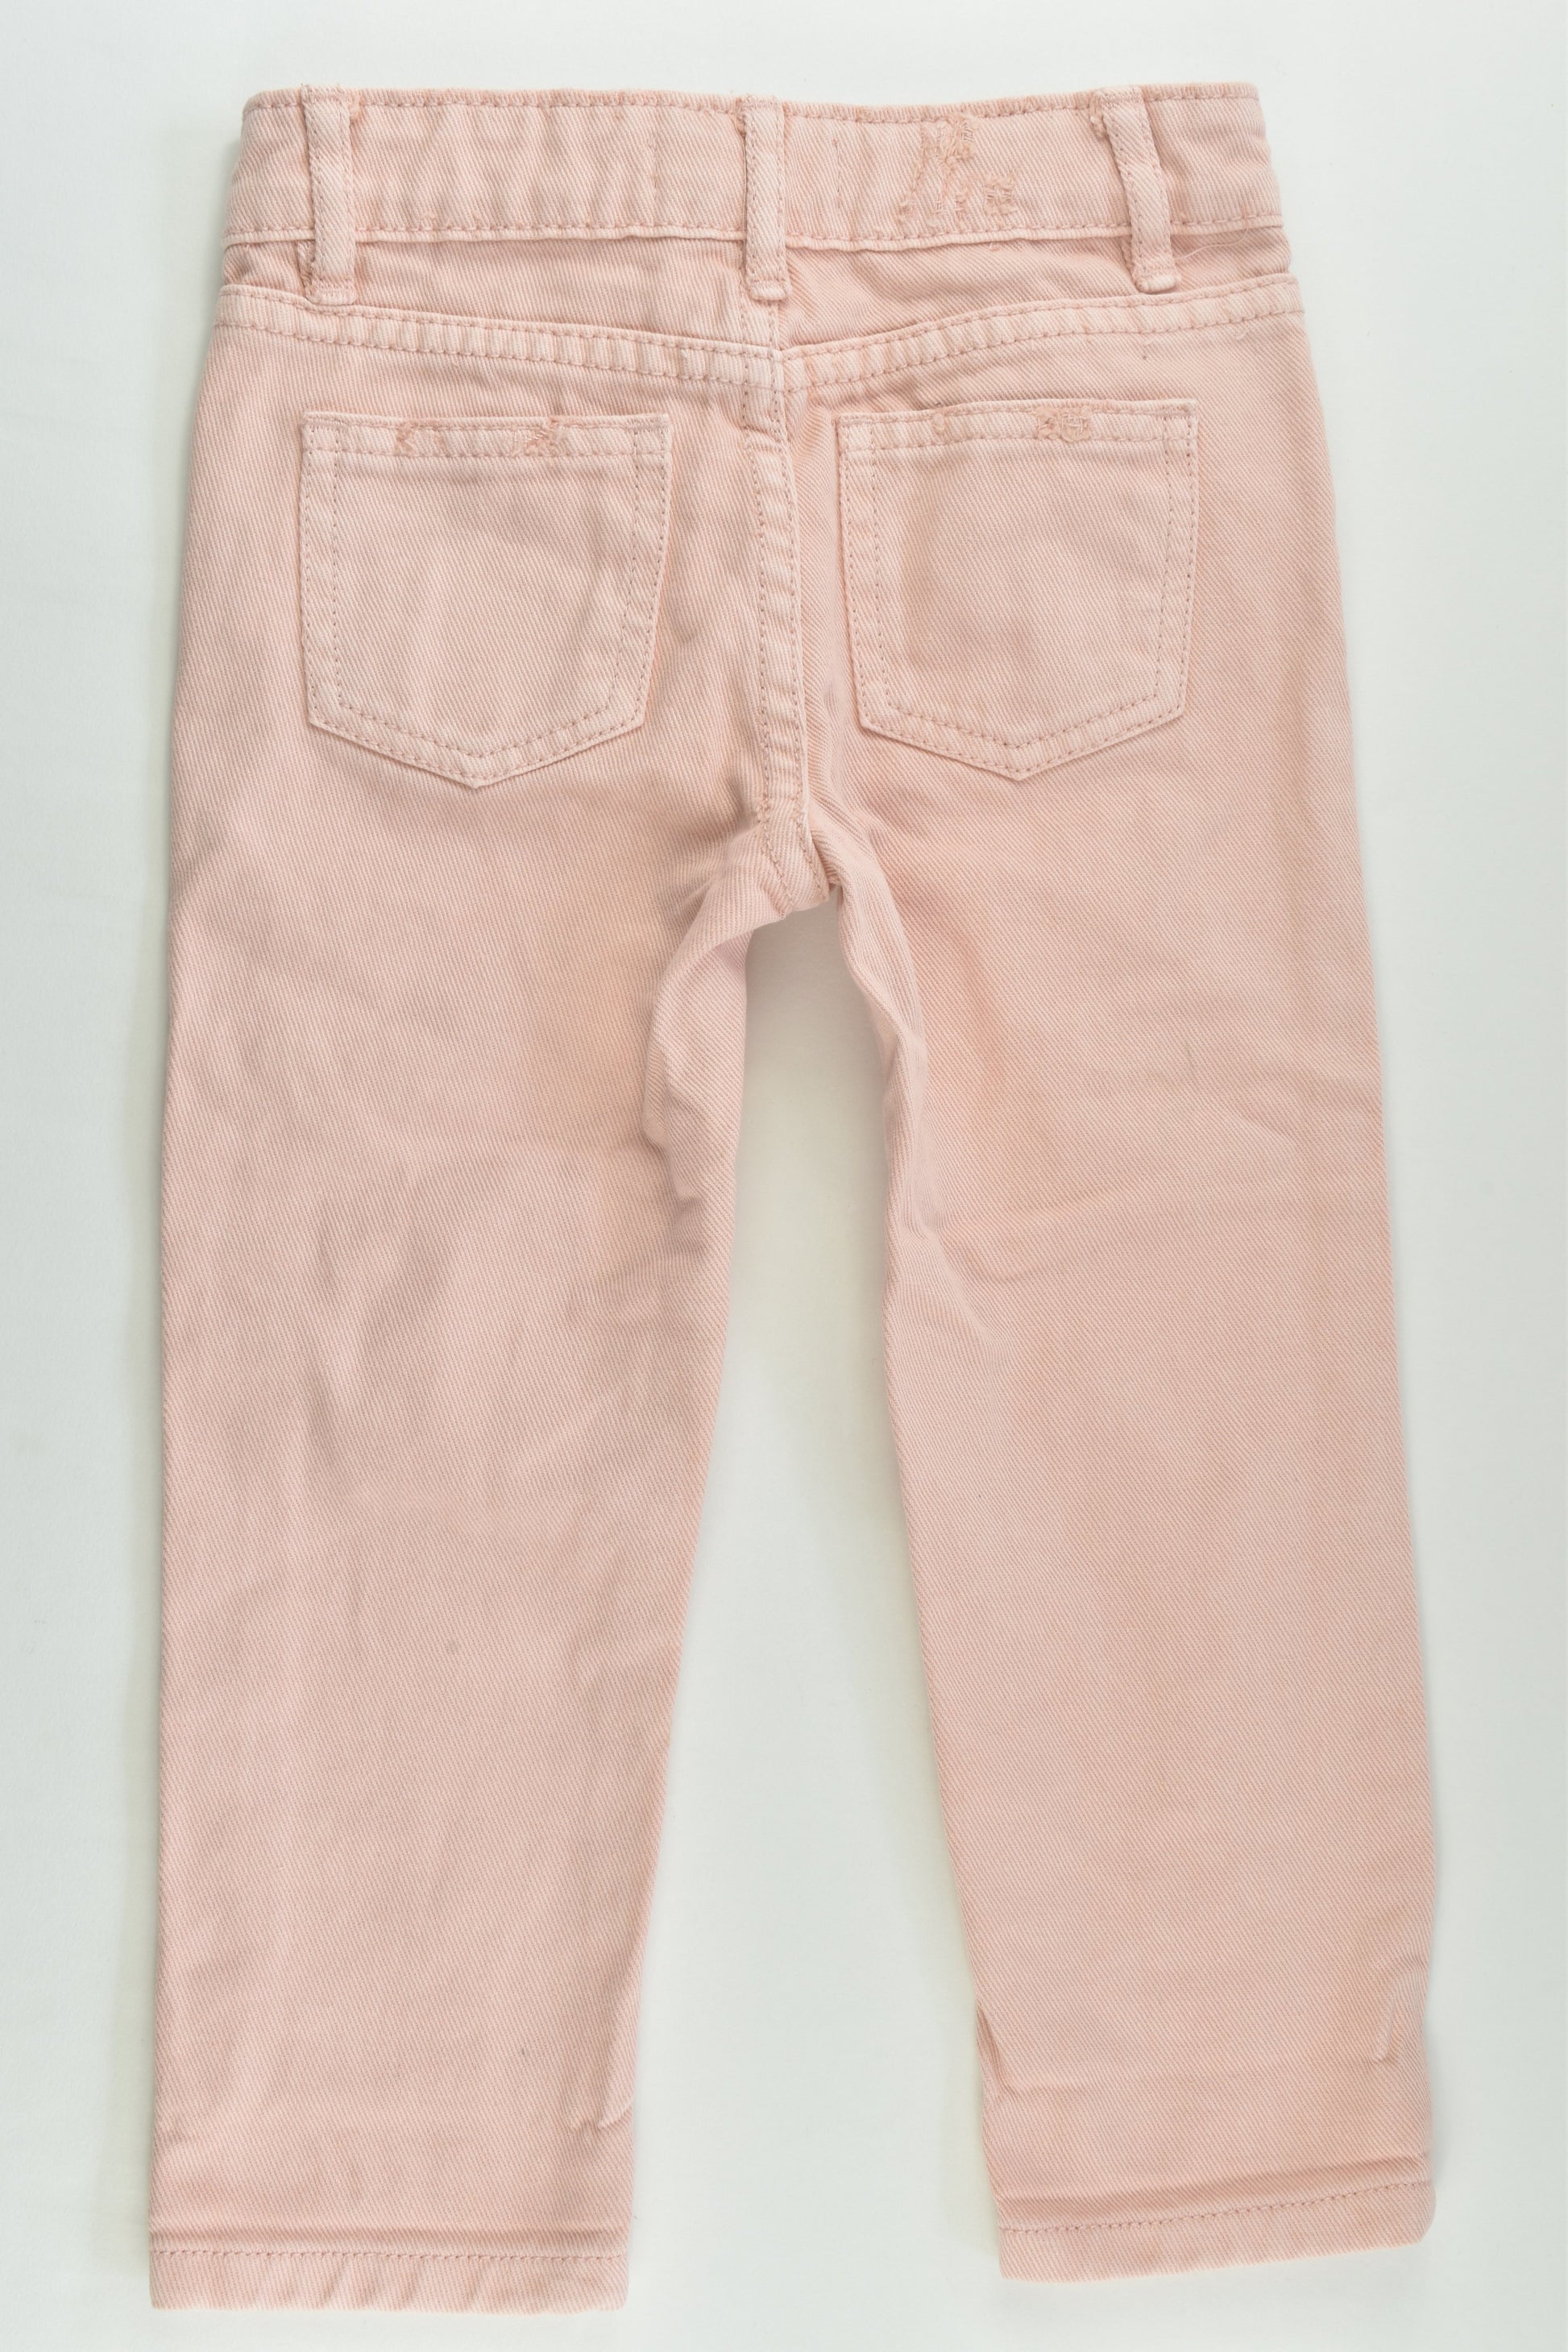 Cotton On Kids Size 2 Pink Denim Pants